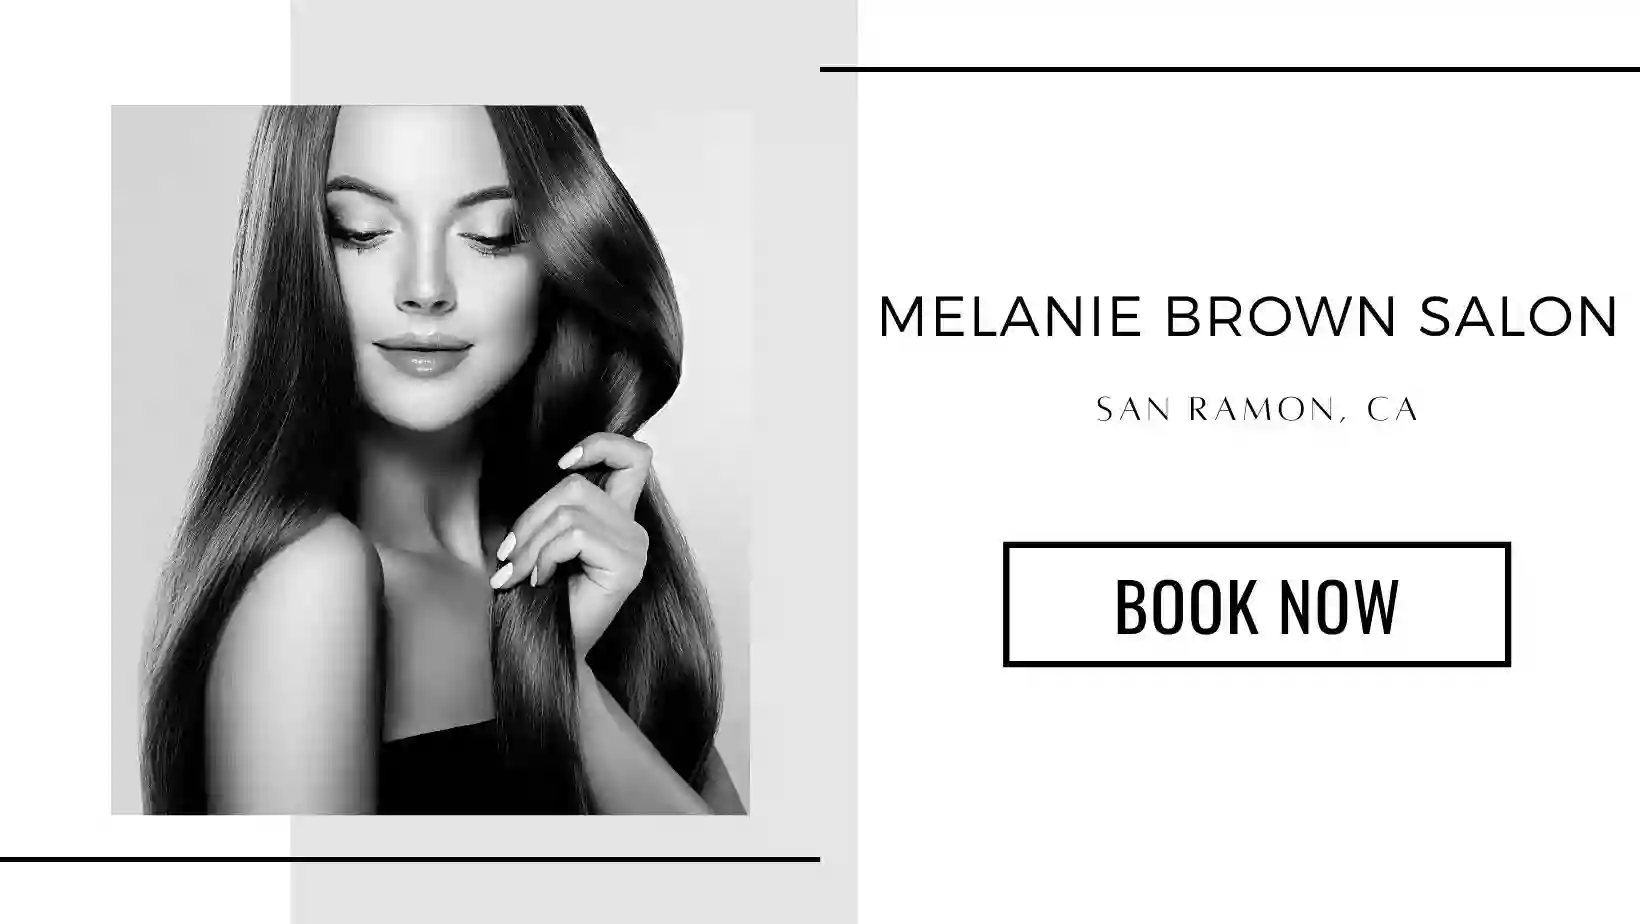 Melanie Brown Salon